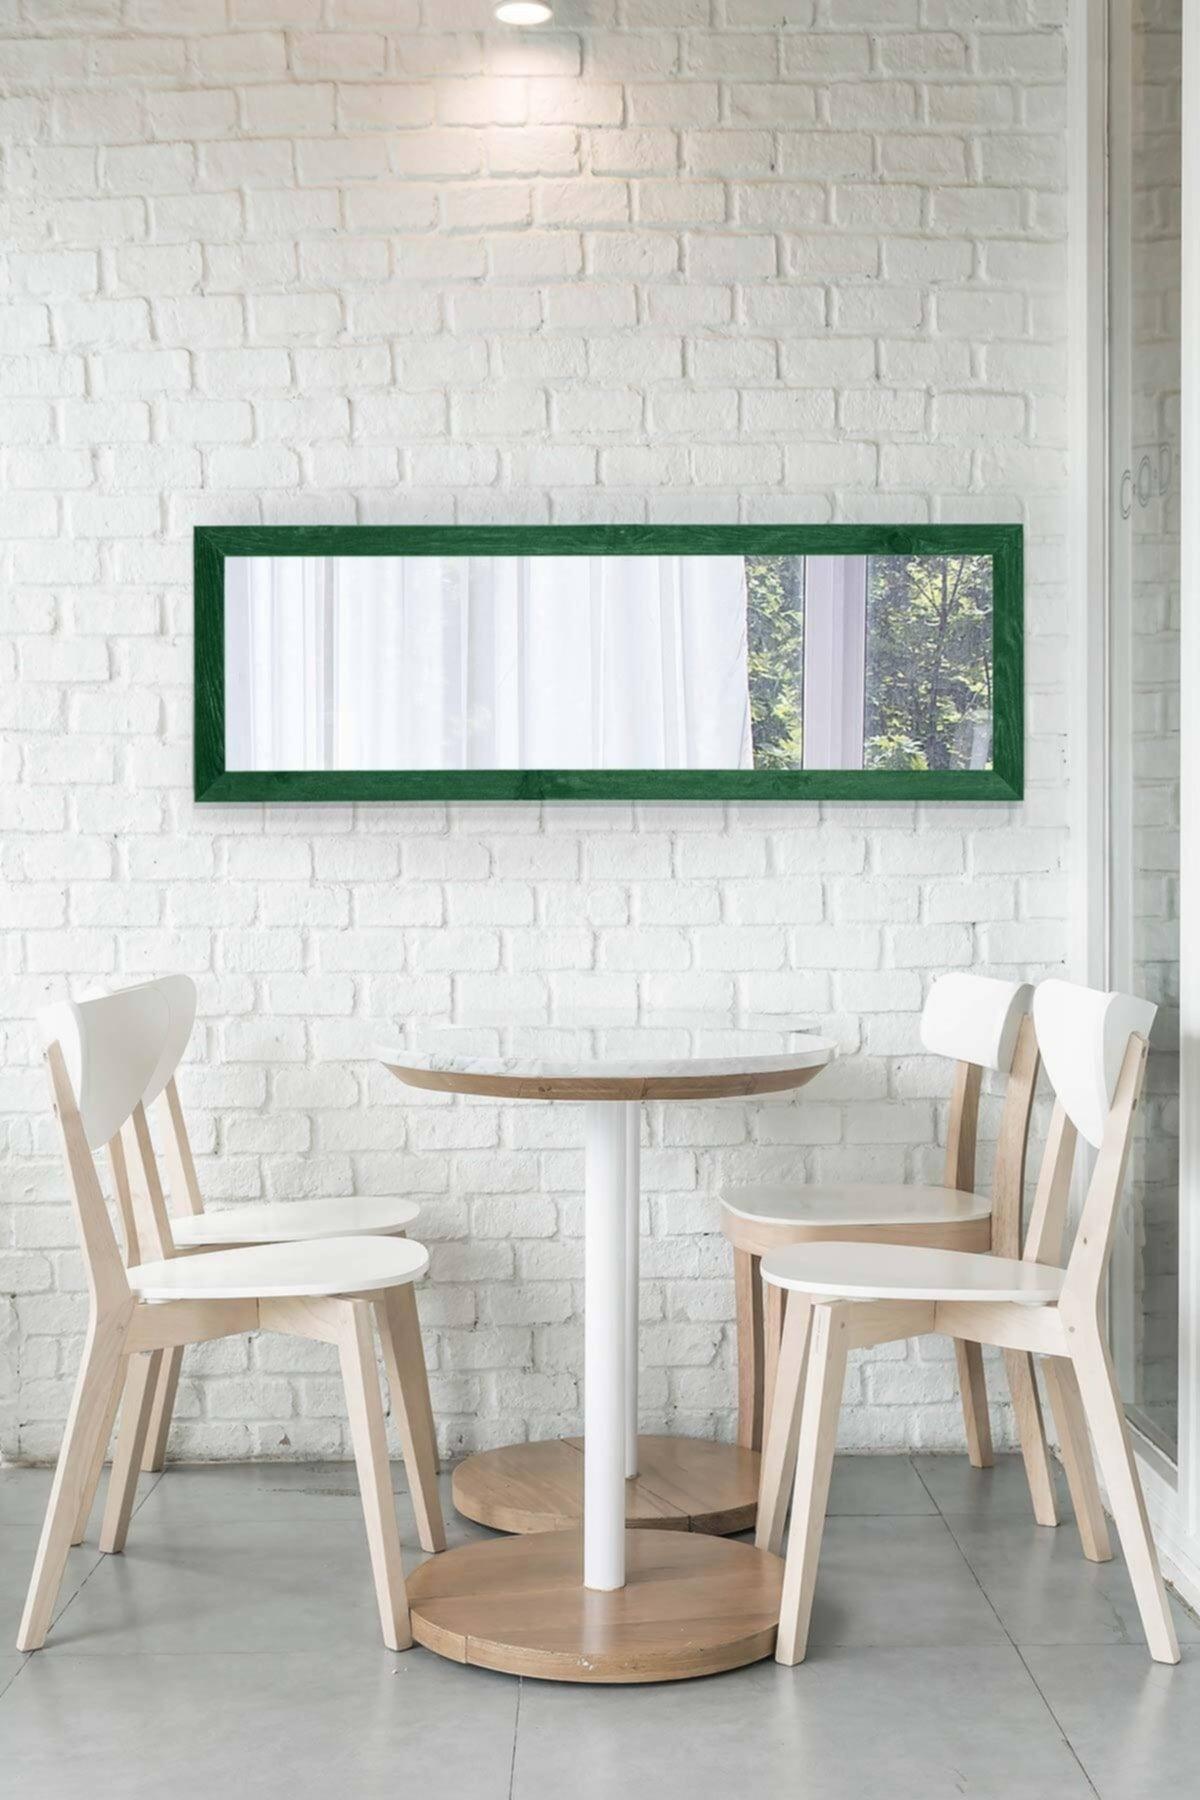 Natural Wood 120x40 Cm Green Paris Decor Shelf Handmade Living Room Office Kitchen Wall Console Full Length Mirror - Swordslife